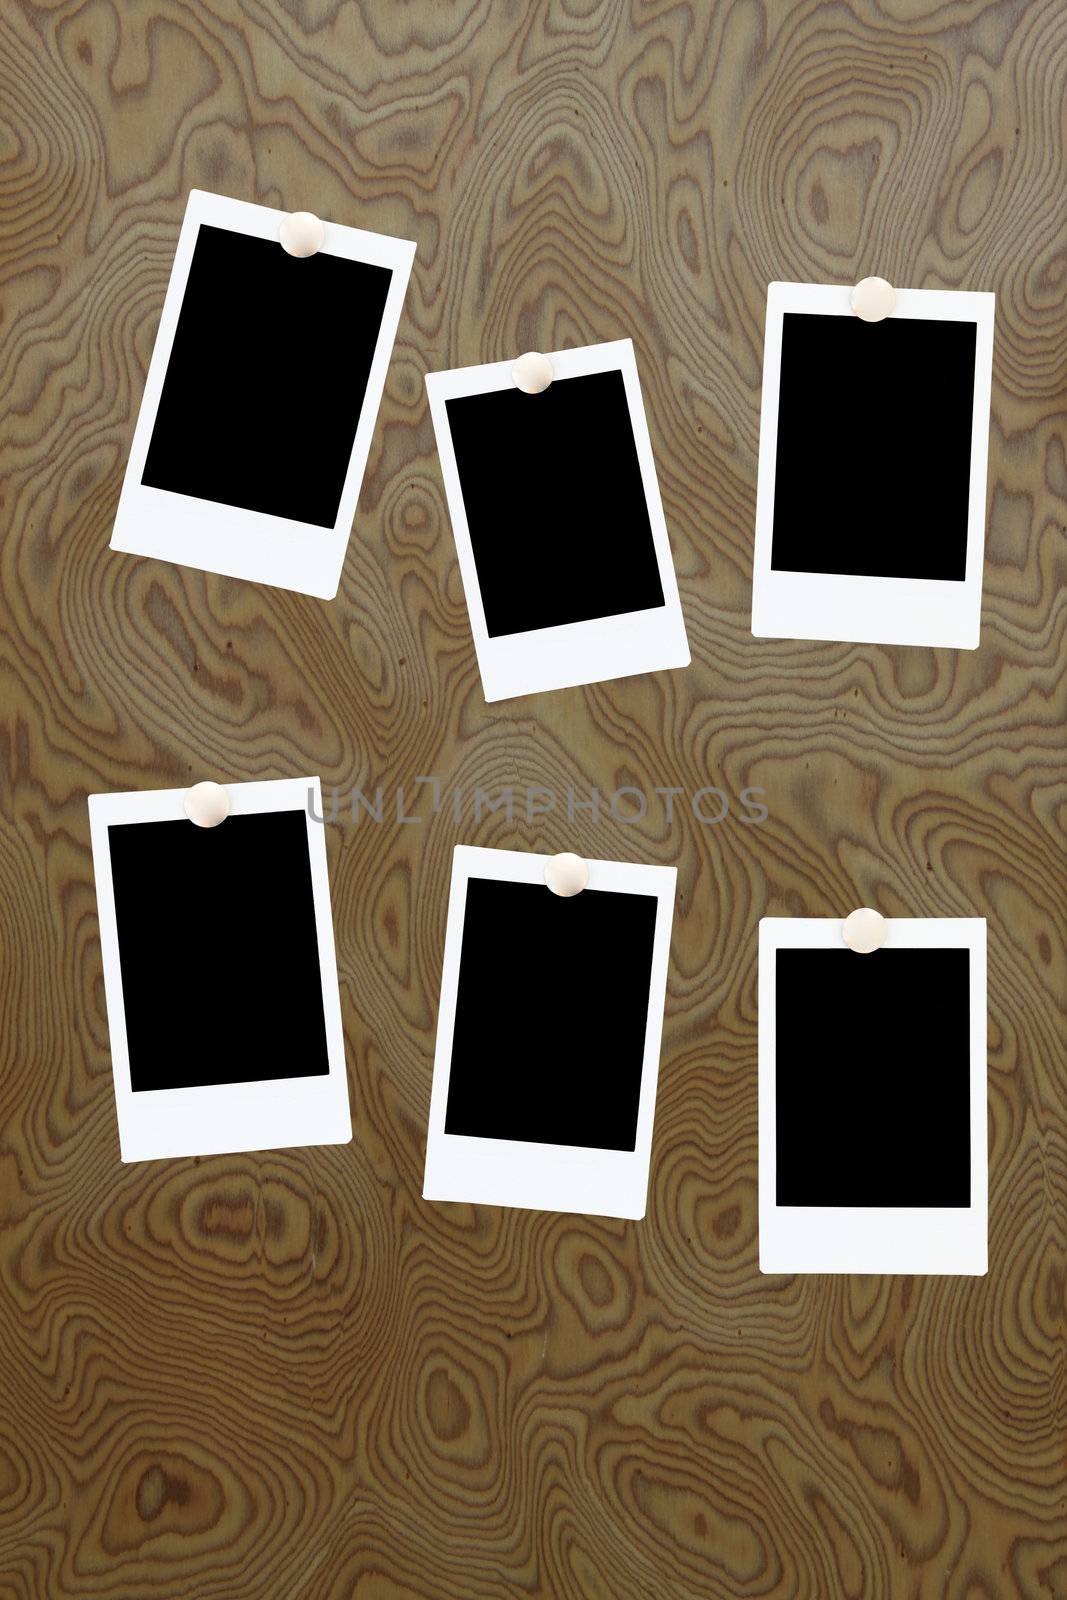 six blank polaroids frames on a wood background